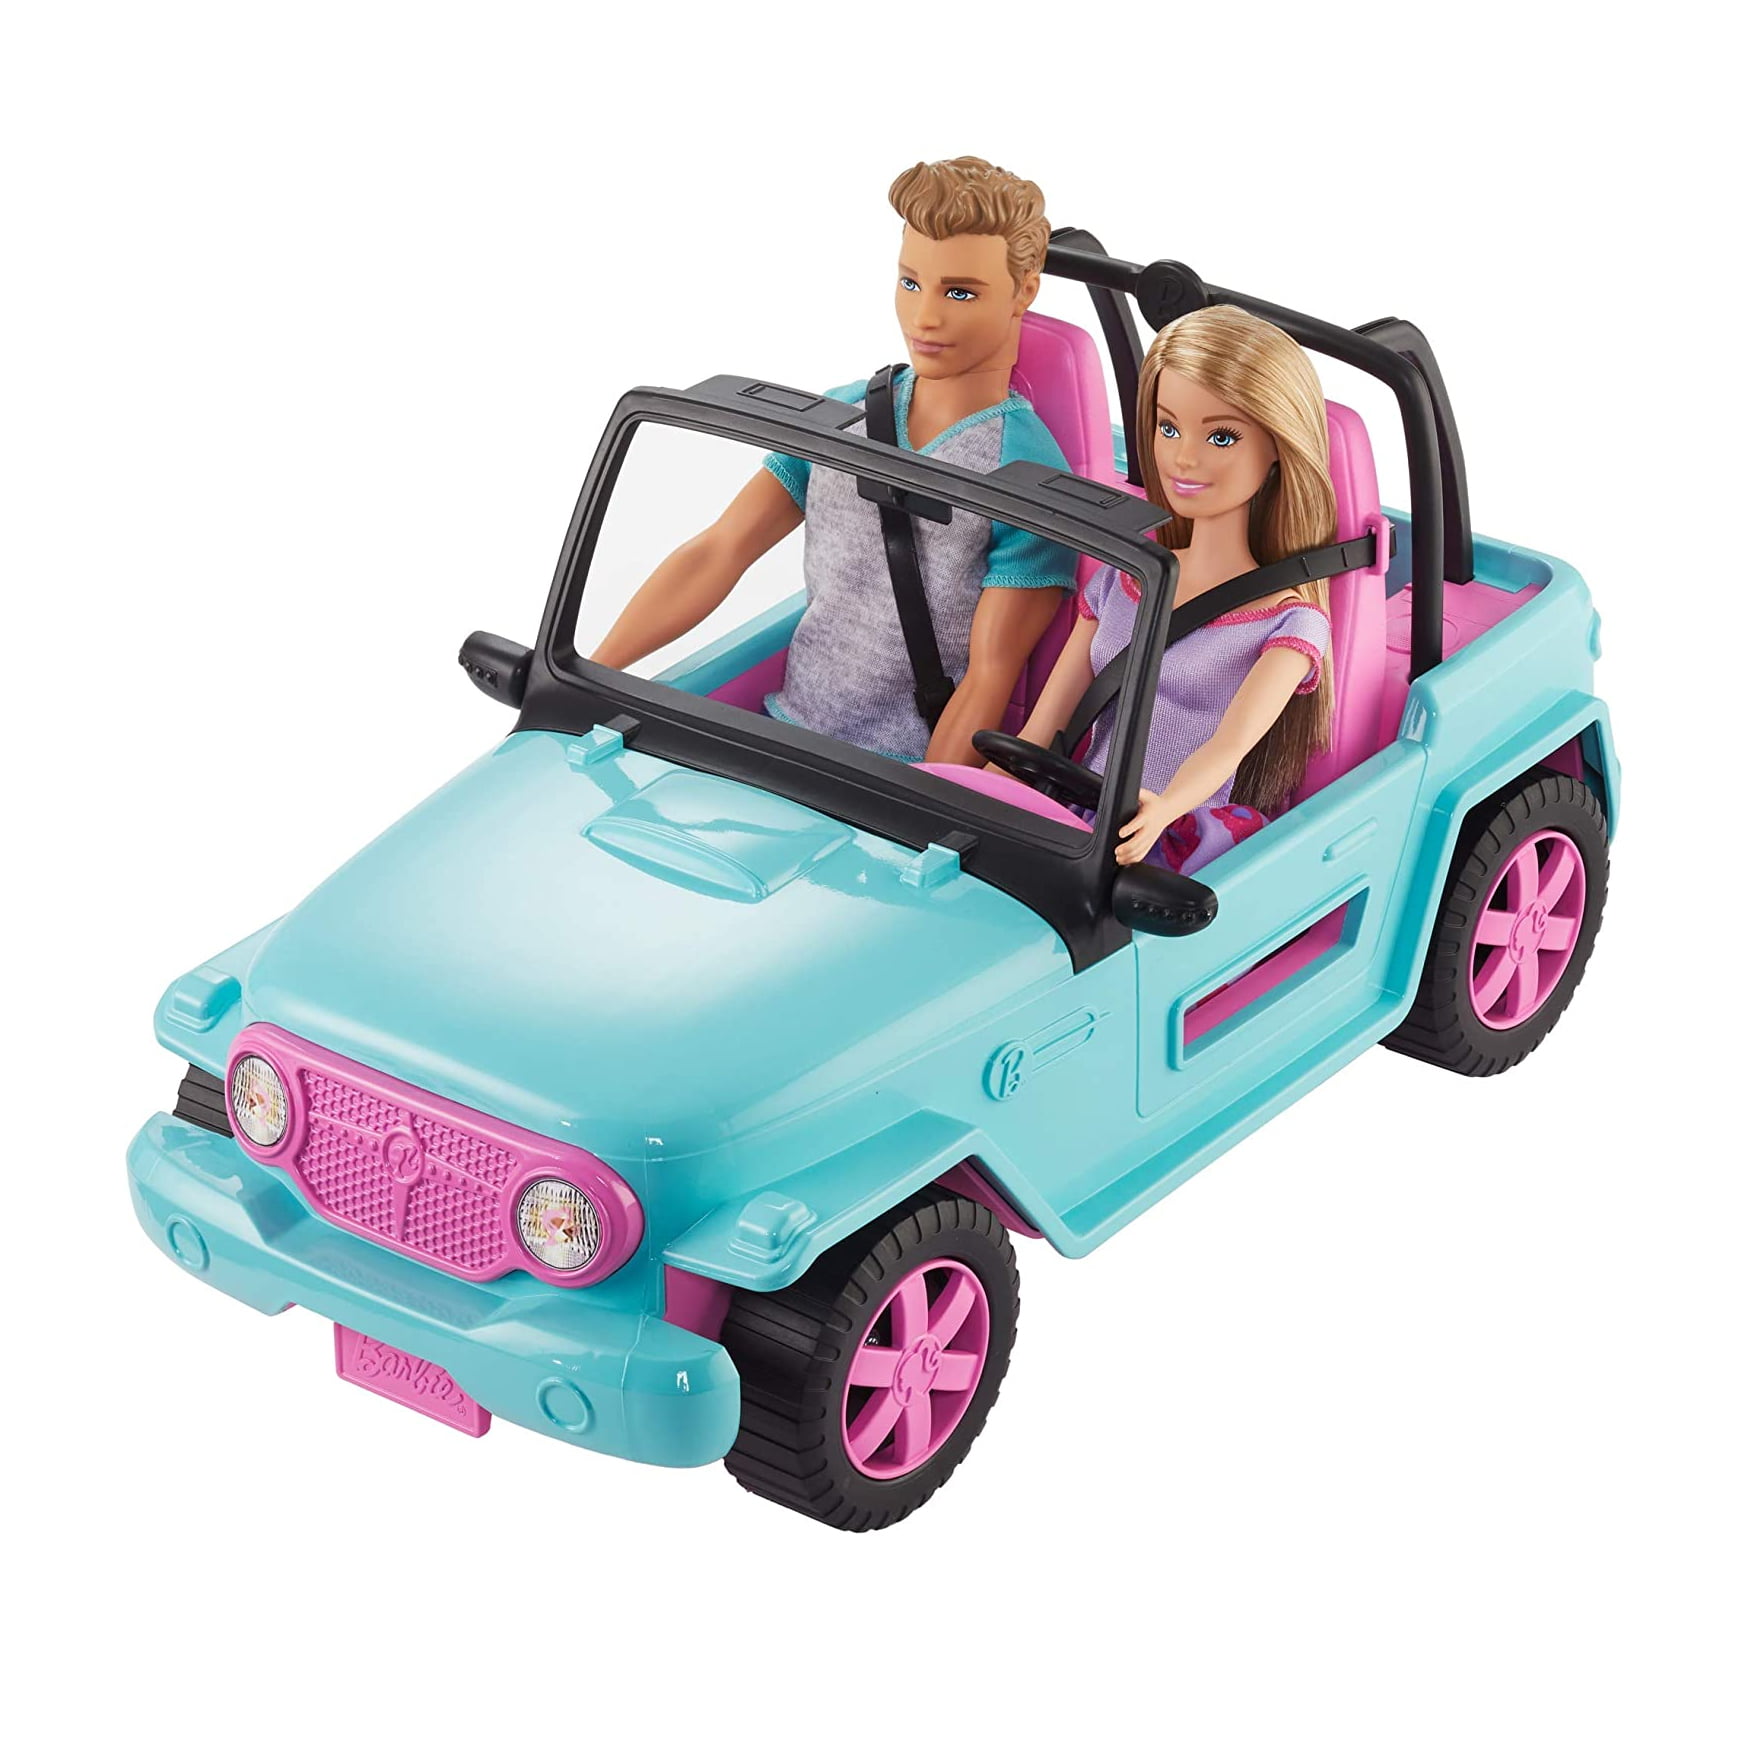 ken barbie car